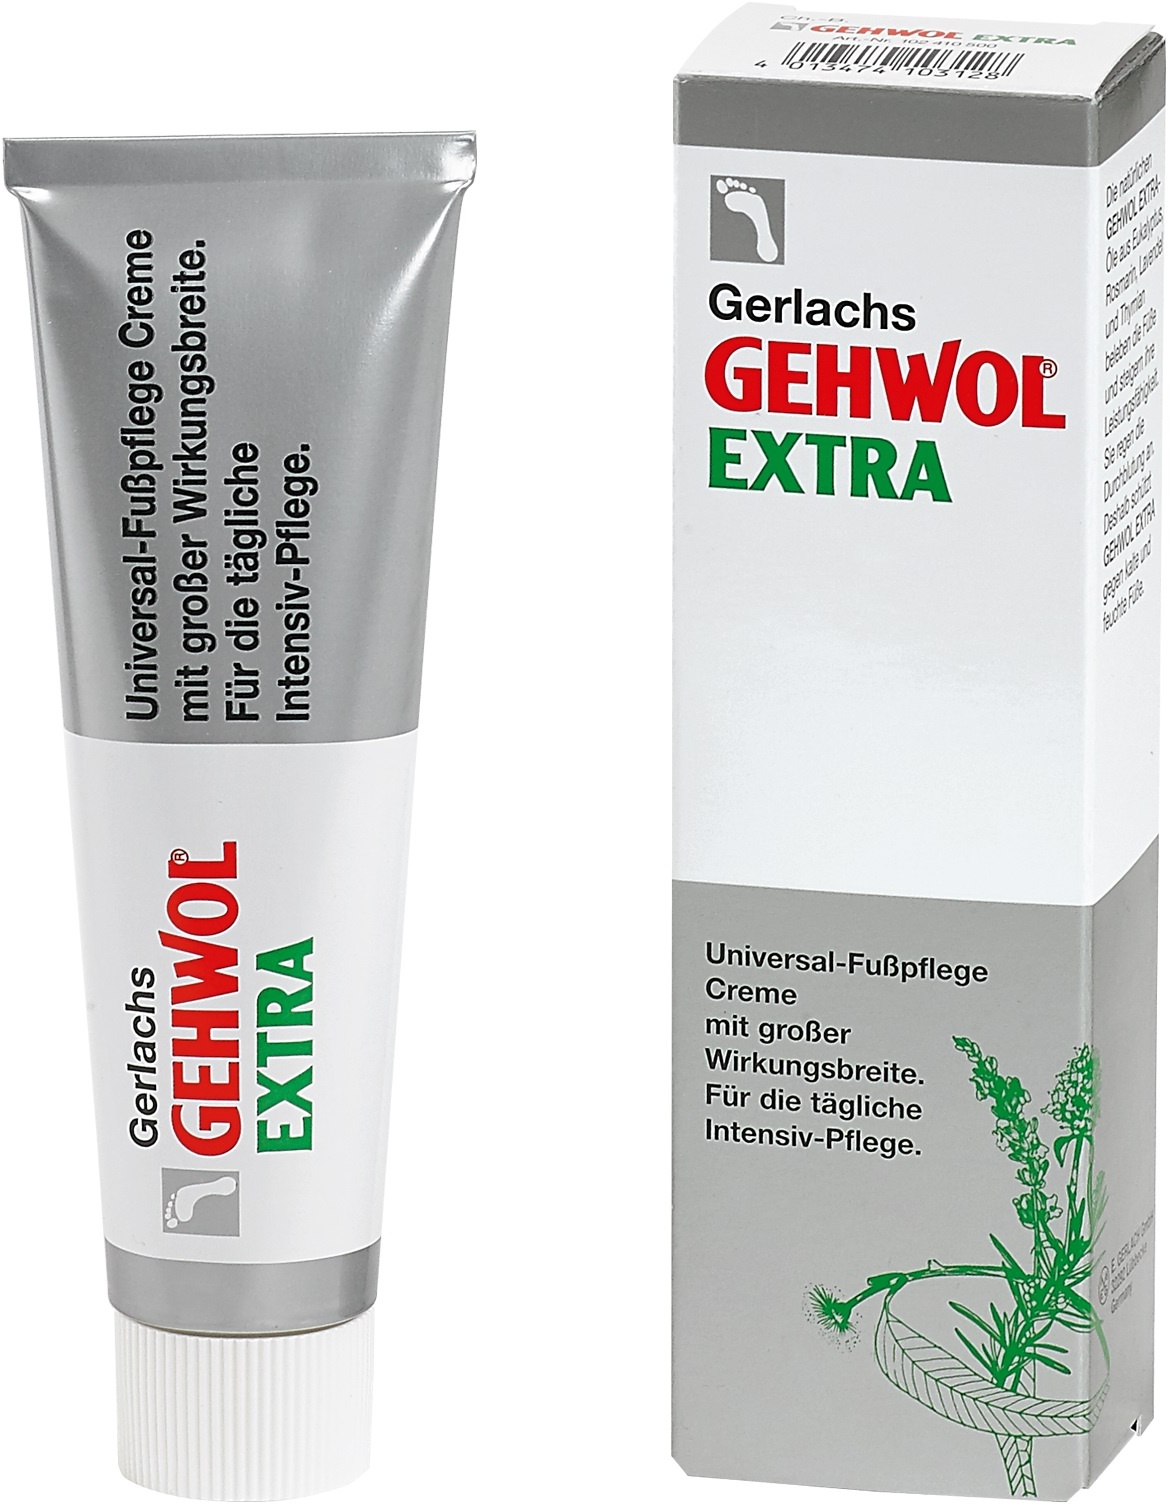 GEHWOL GERLACHS EXTRA 75 ml